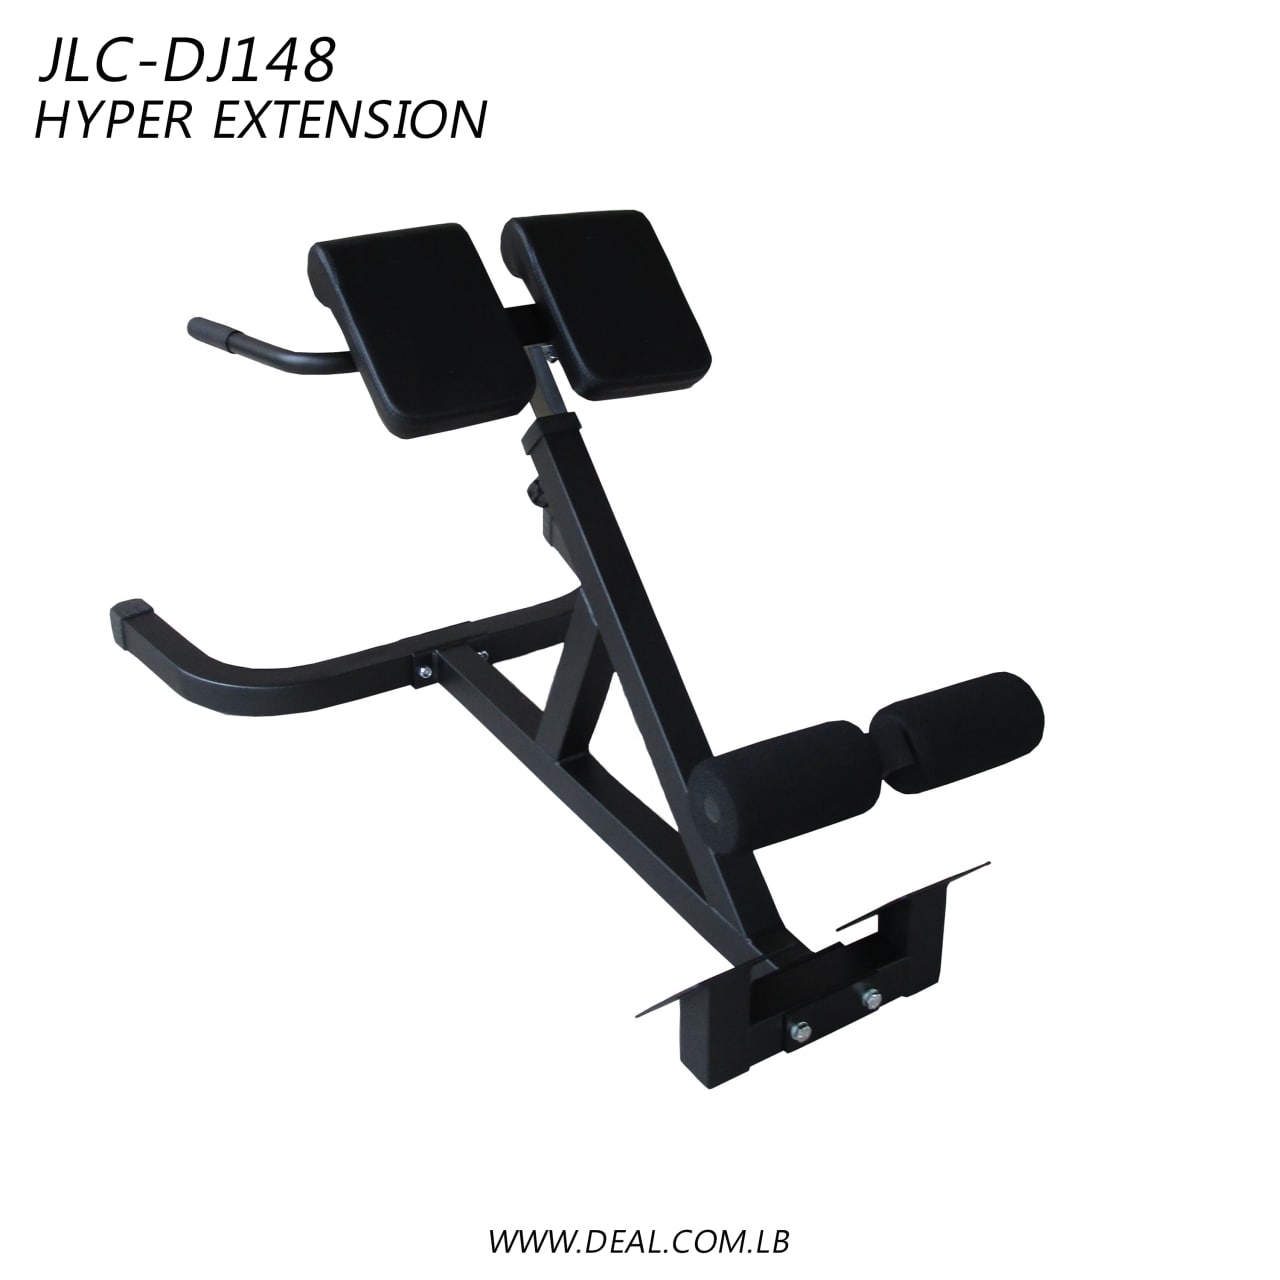 JLC-DJ148 | Hyper Extension